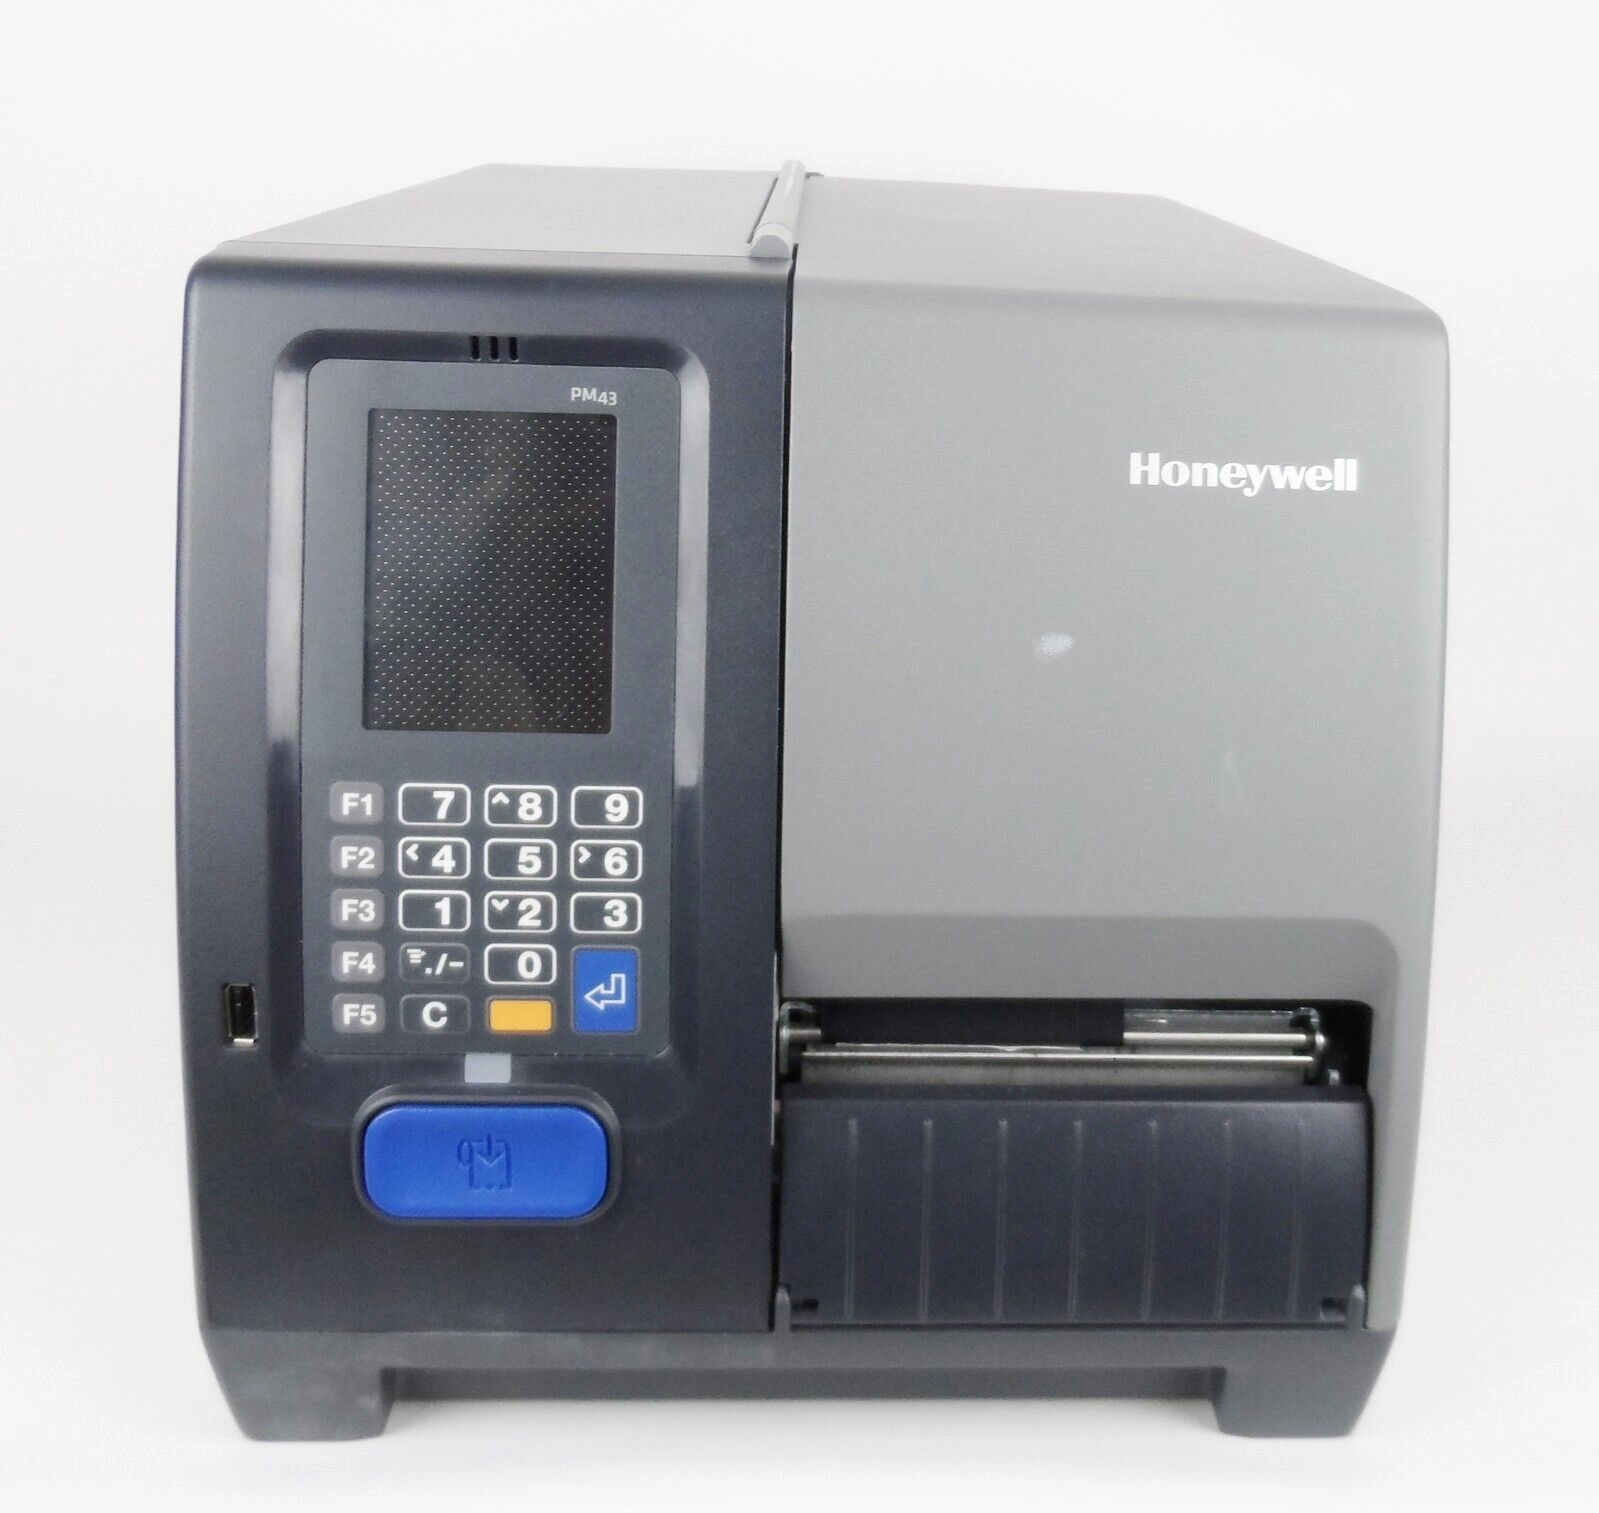 Honeywell PM43 Barcode Label Printer